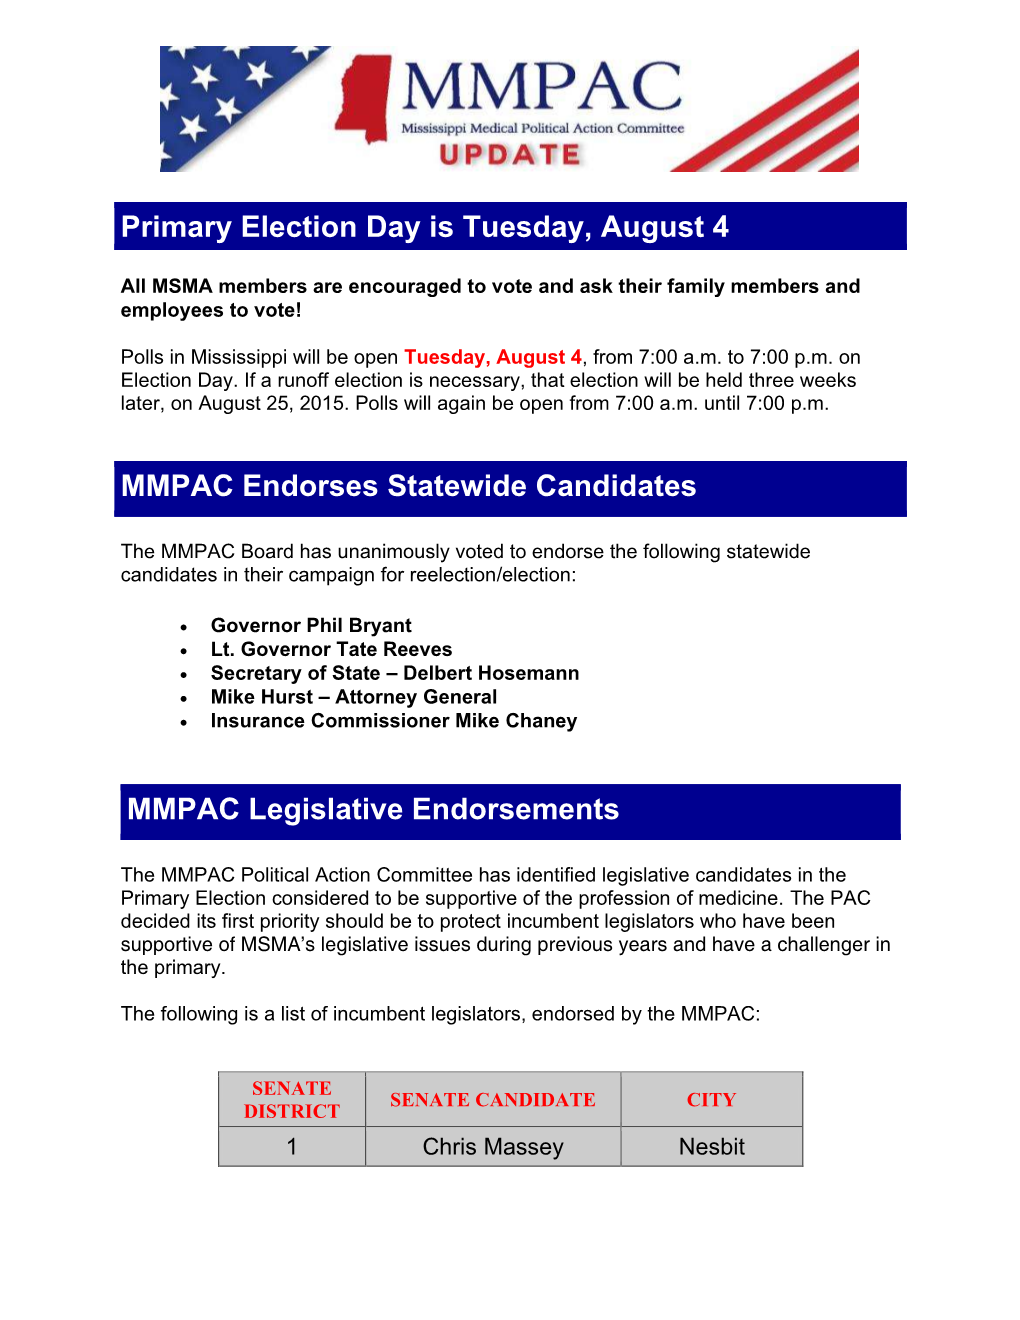 MMPAC Statewide and Legislative Endorsements